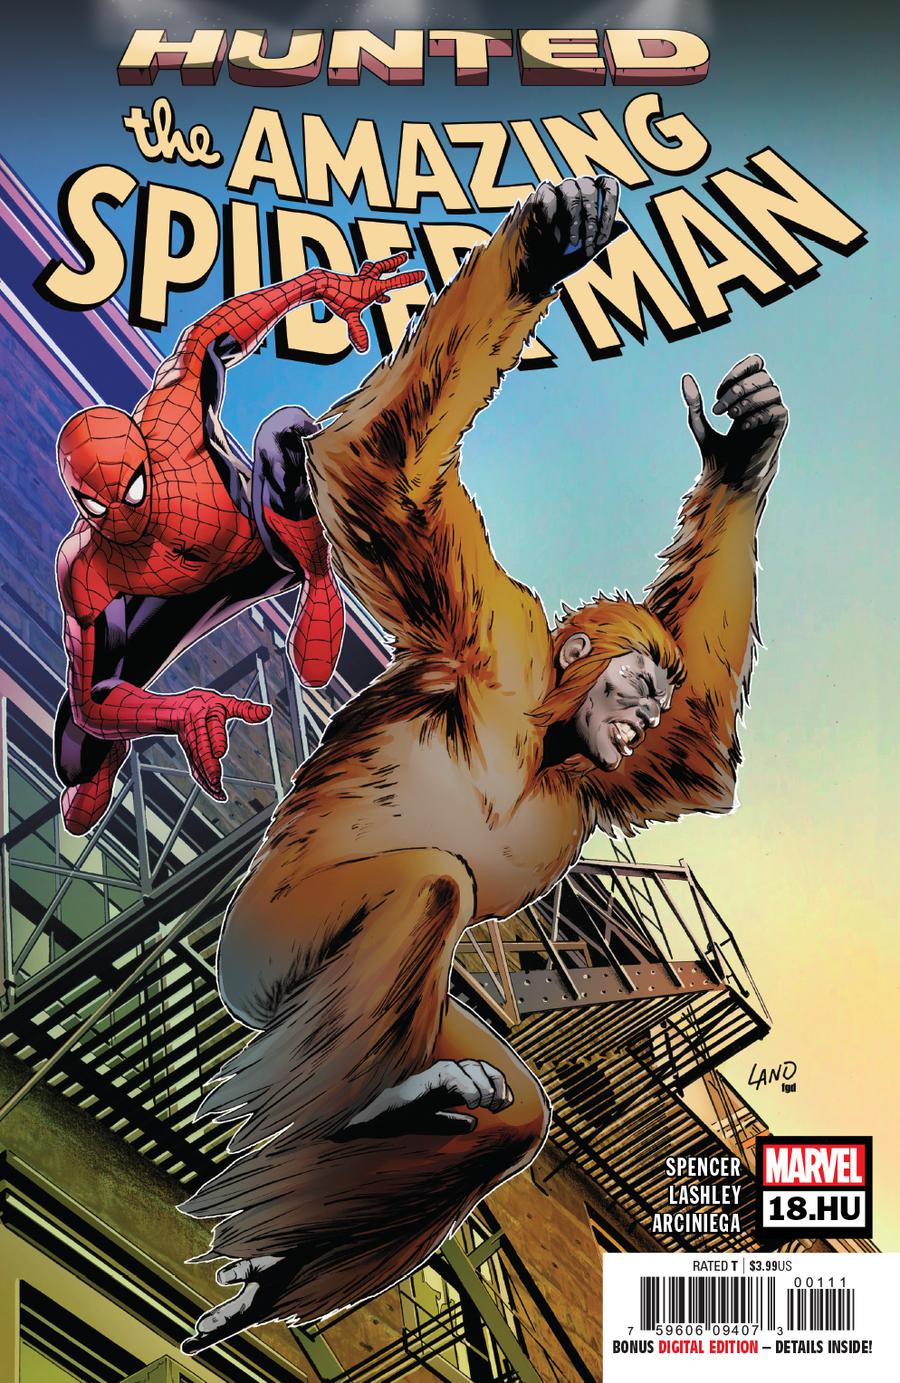 Amazing Spider-Man Vol.5 #18.HU [2019]